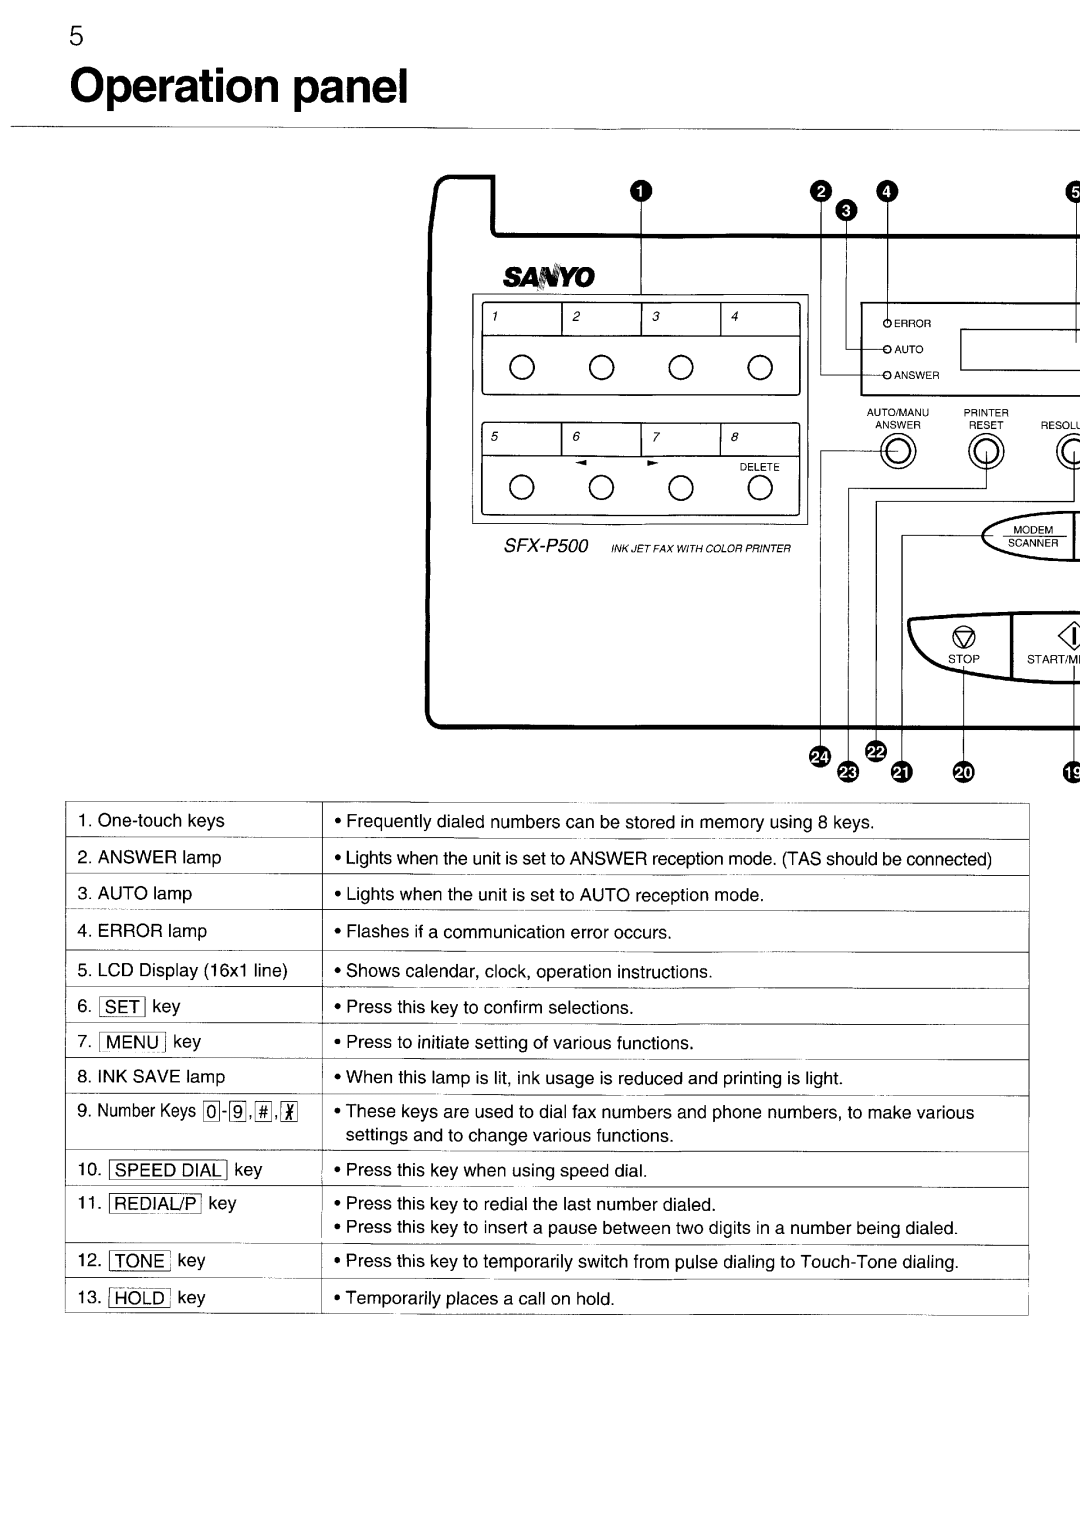 Sanyo SFX-P500 manual 